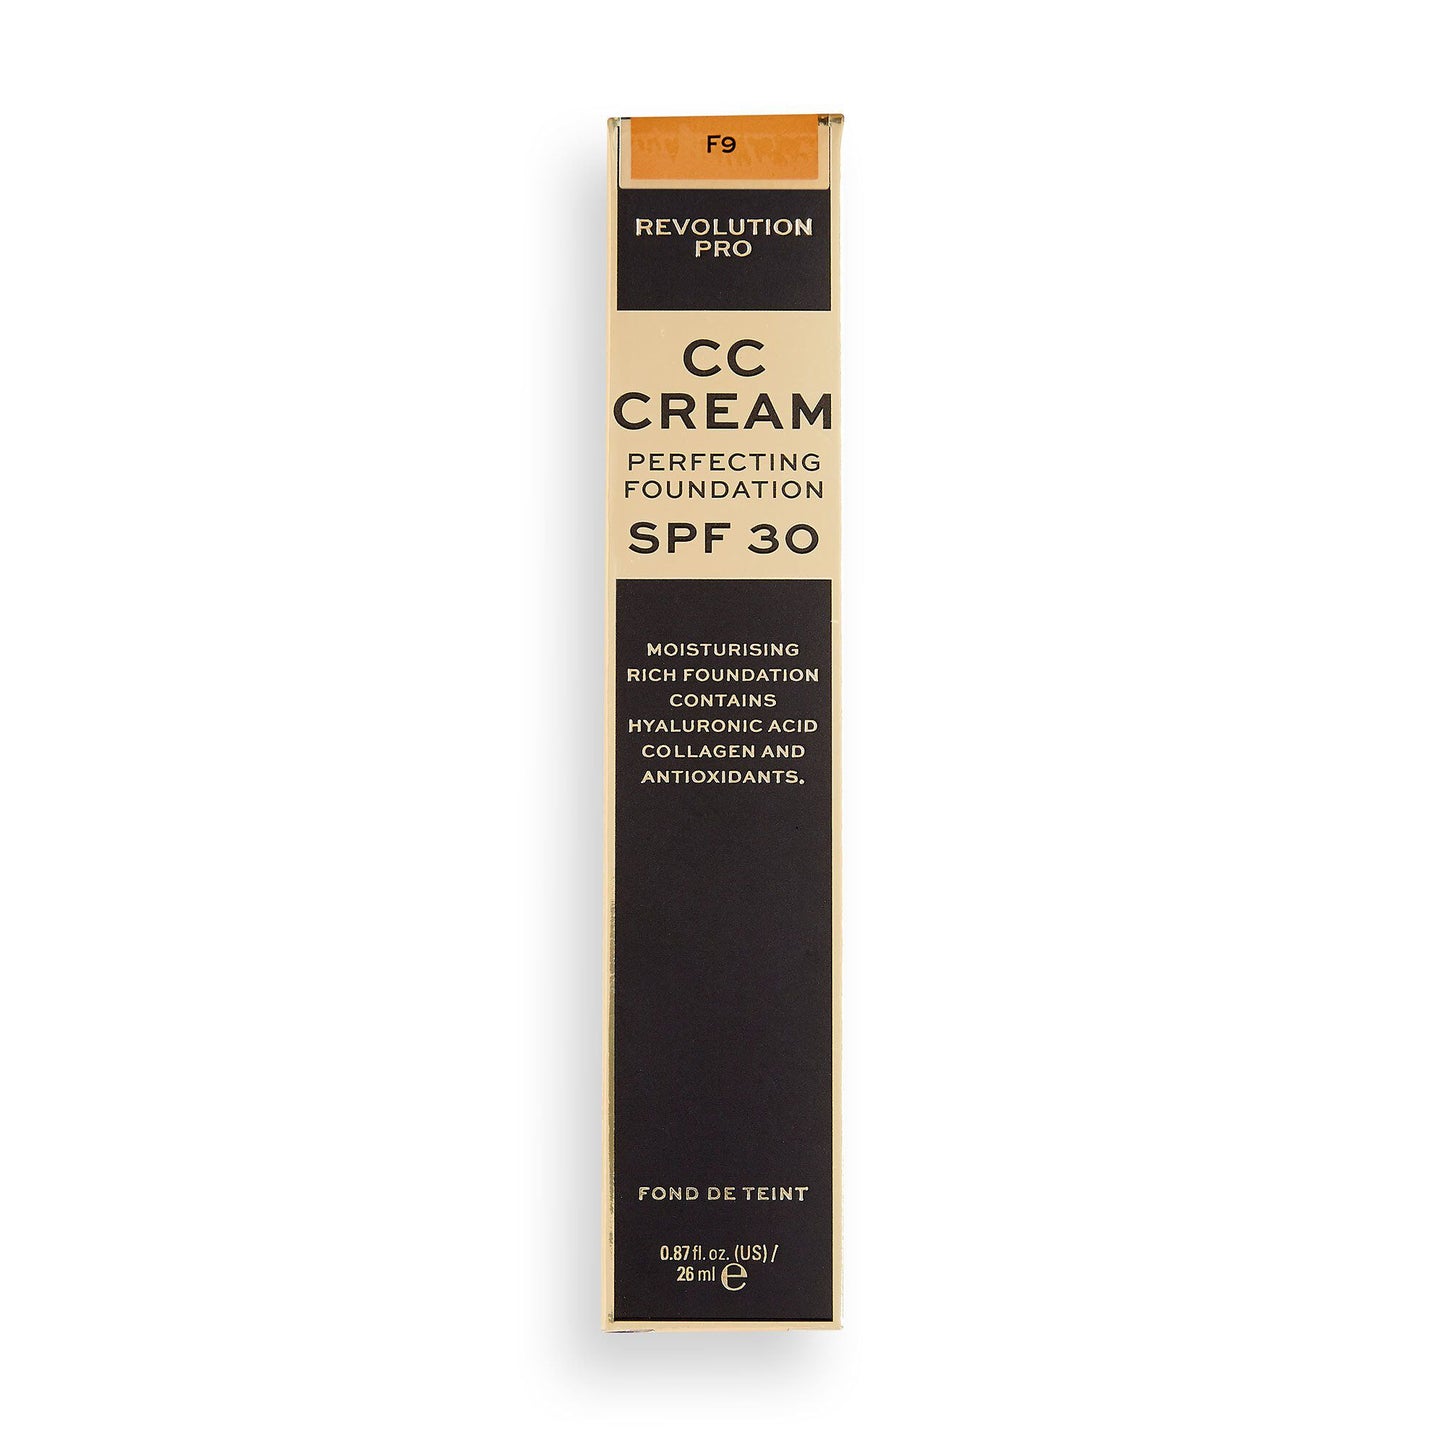 Revolution Pro CC Cream Perfecting Foundation SPF30 F9